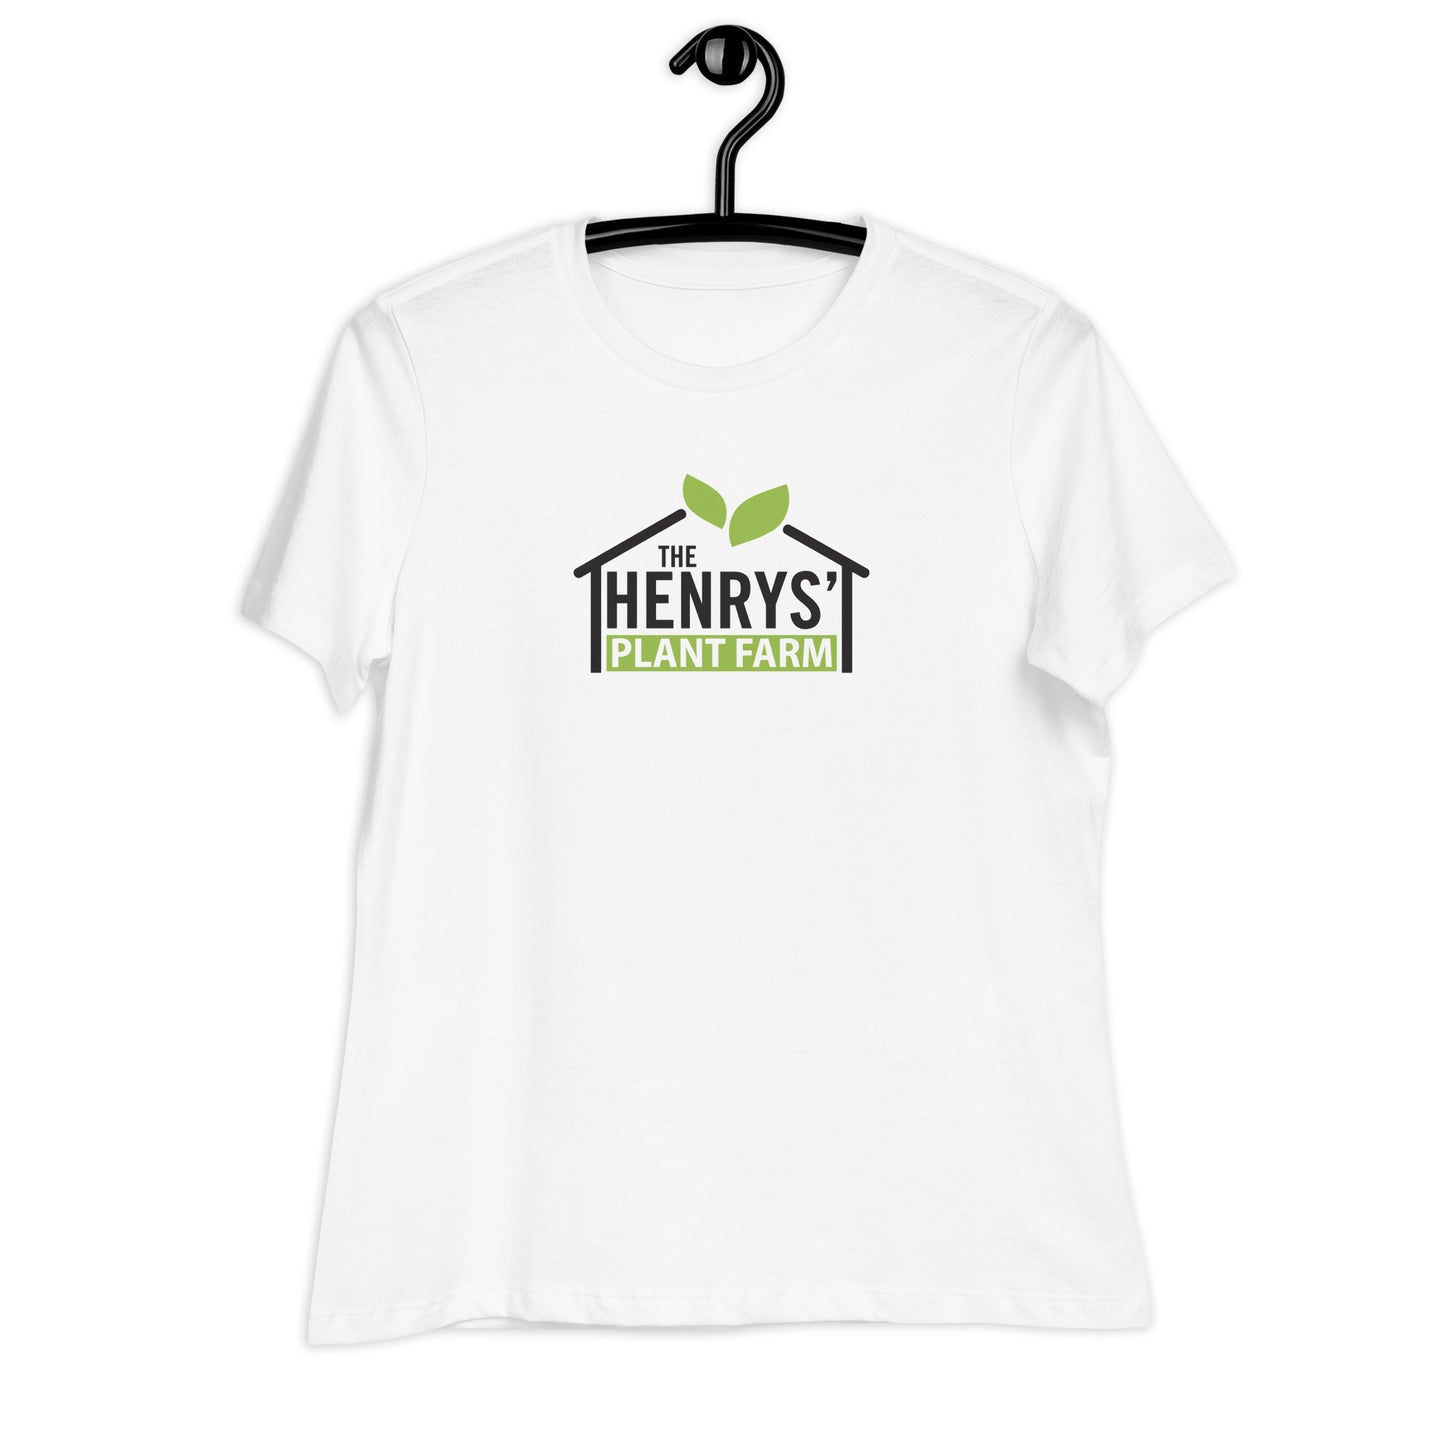 The Henrys' Plant Farm - Women's T-Shirt